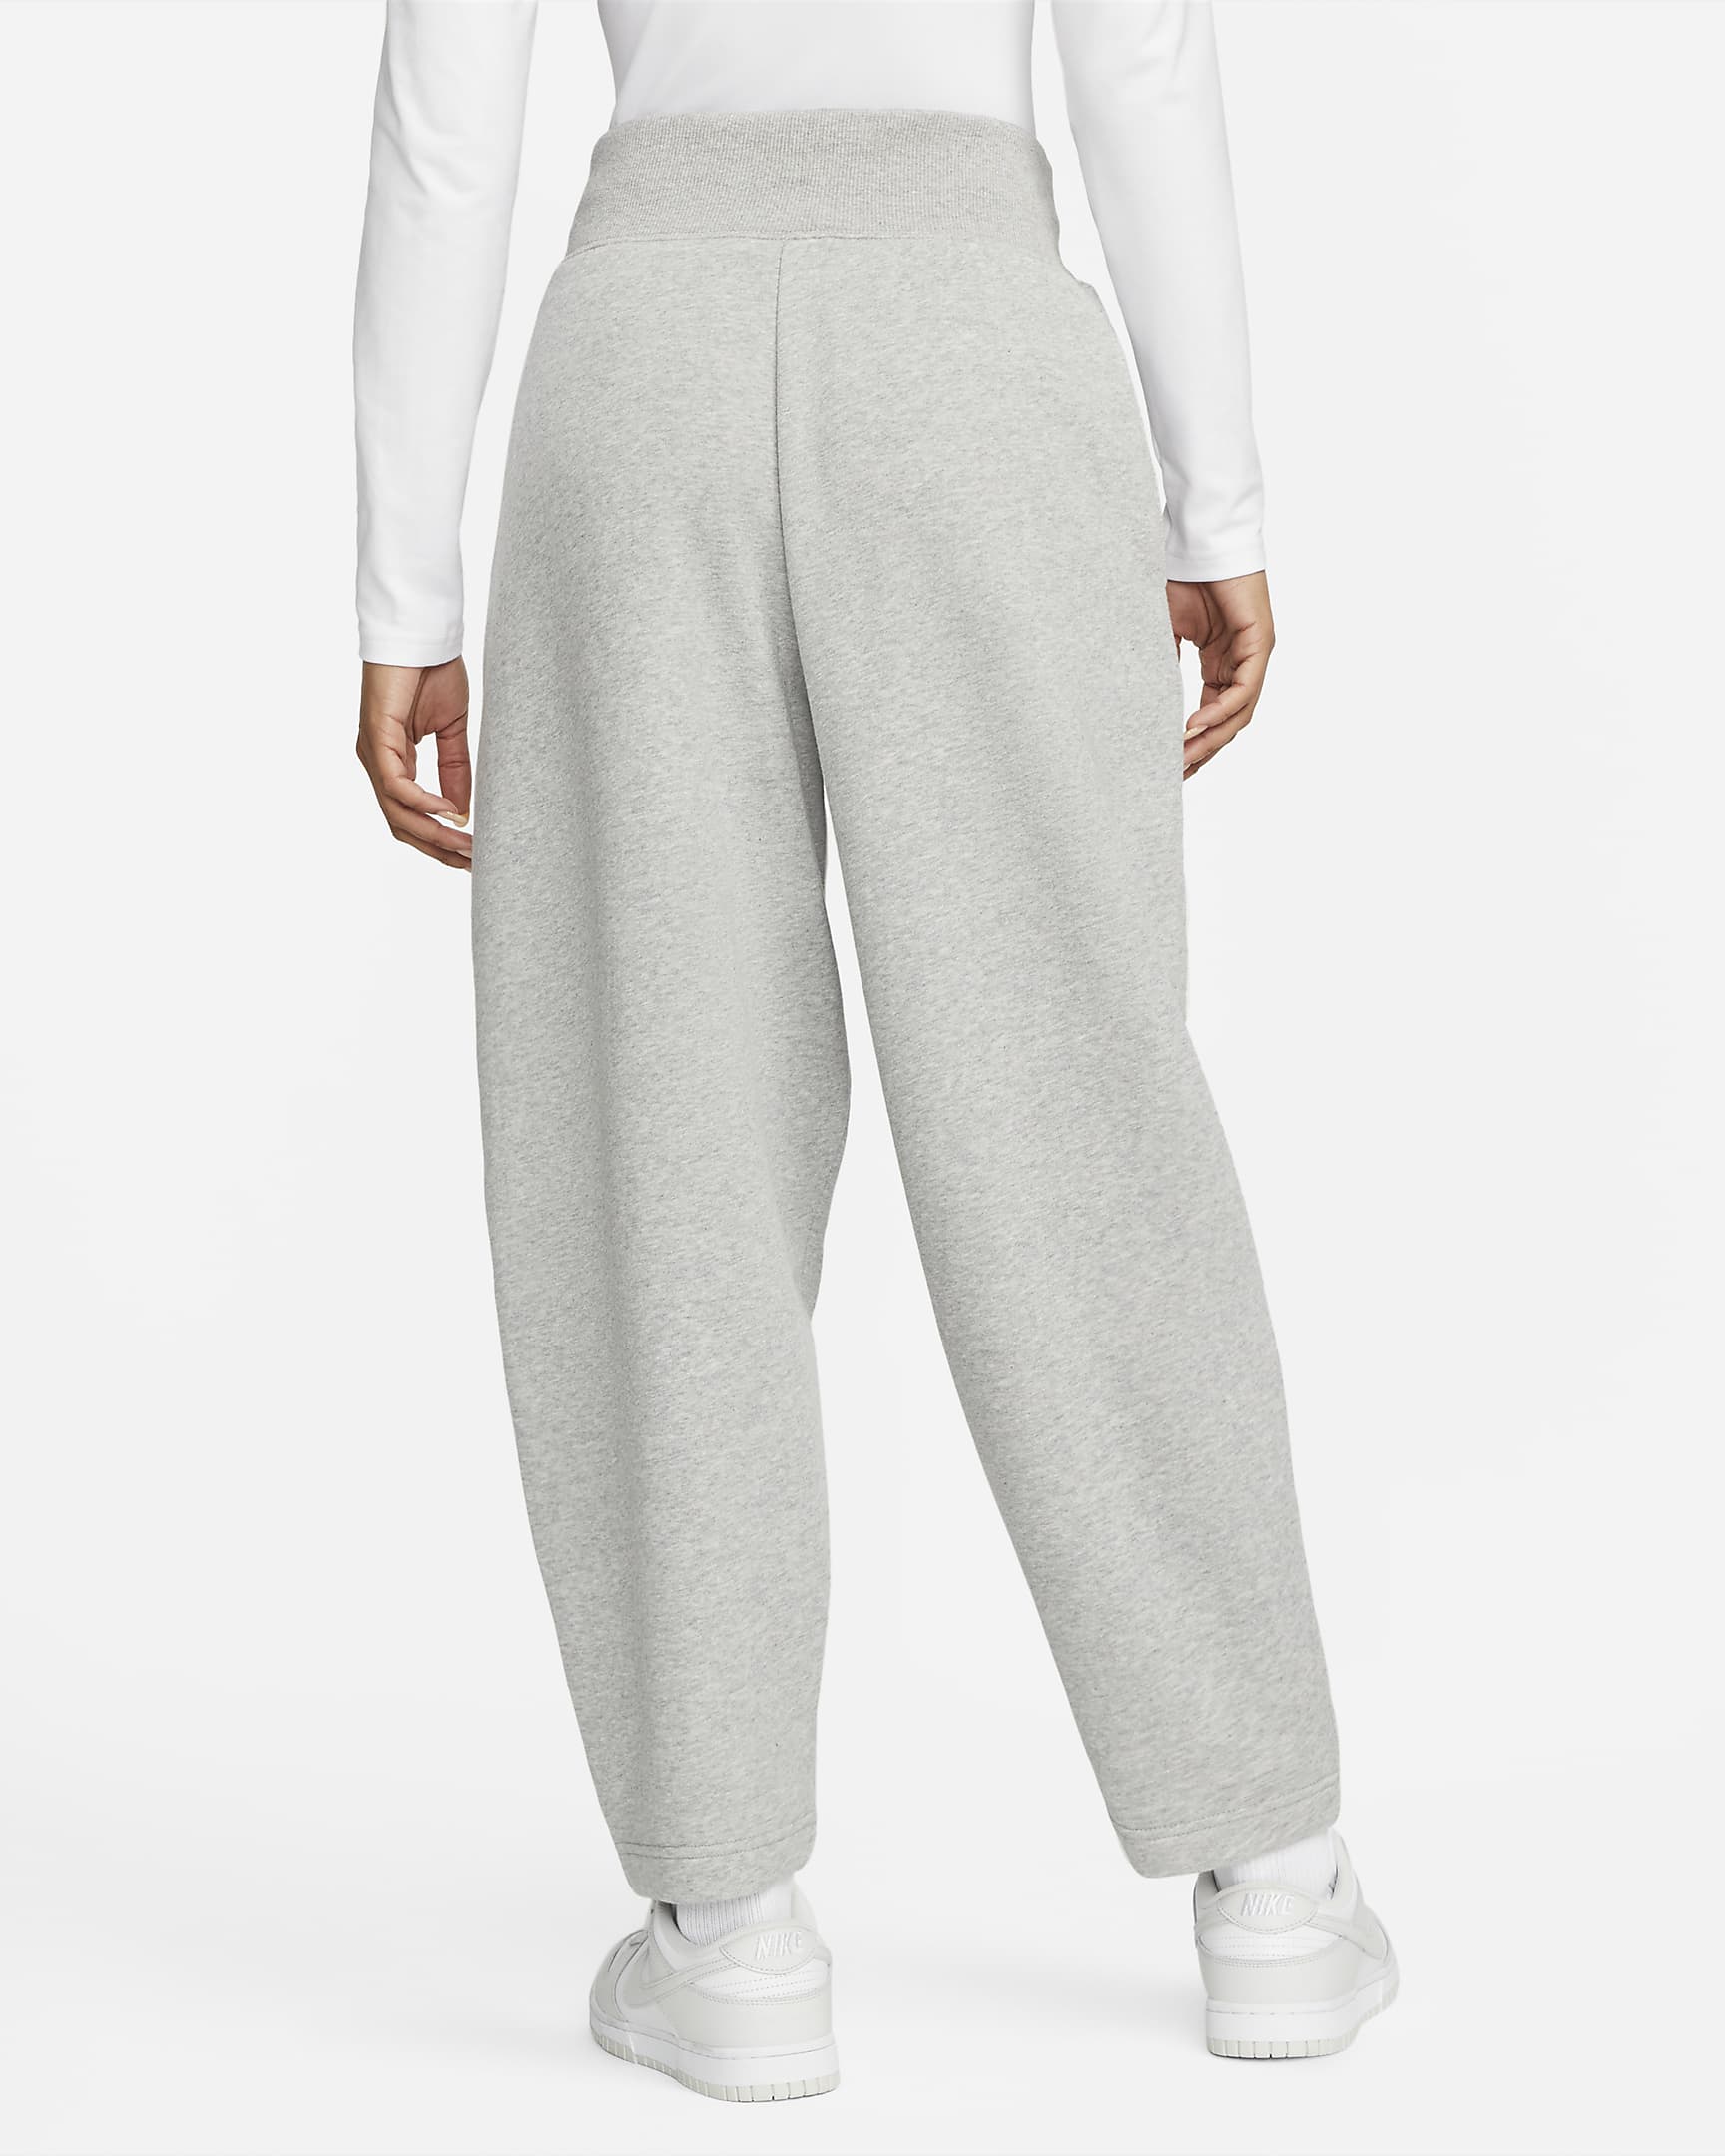 Pantalon de survêtement 7/8 taille haute Curve Nike Sportswear Phoenix Fleece pour femme - Dark Grey Heather/Sail